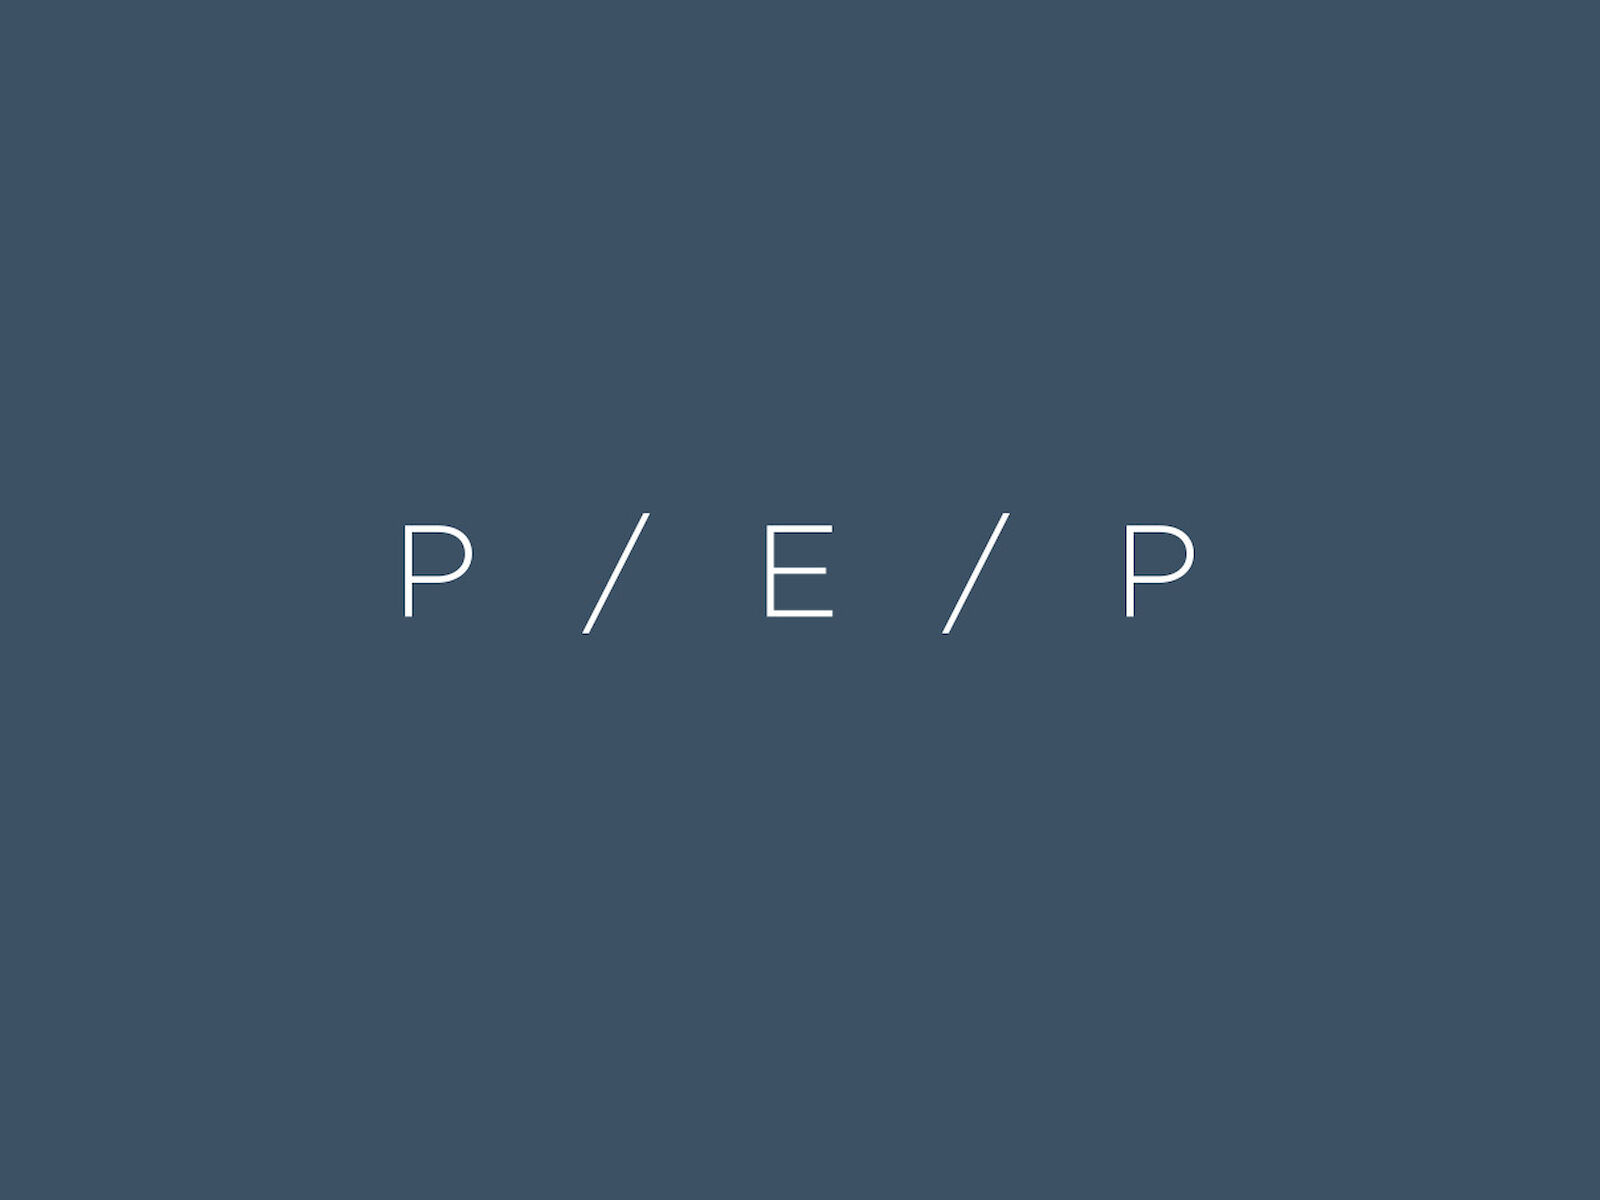 Corporate design and website for P / E / P